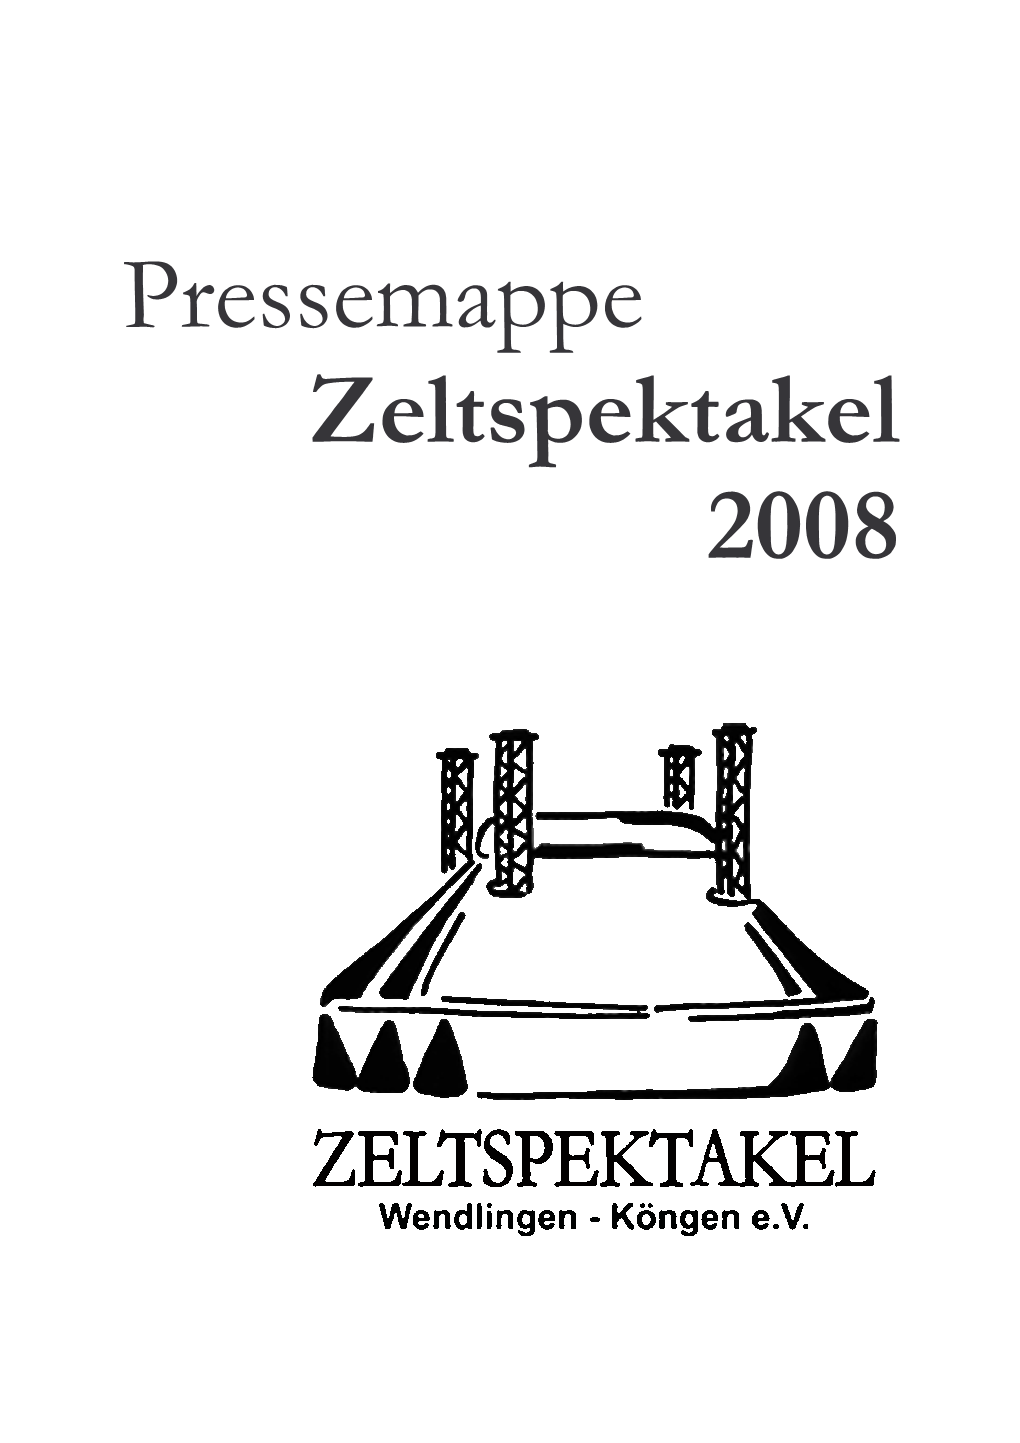 Pressemappe 2008.Pdf